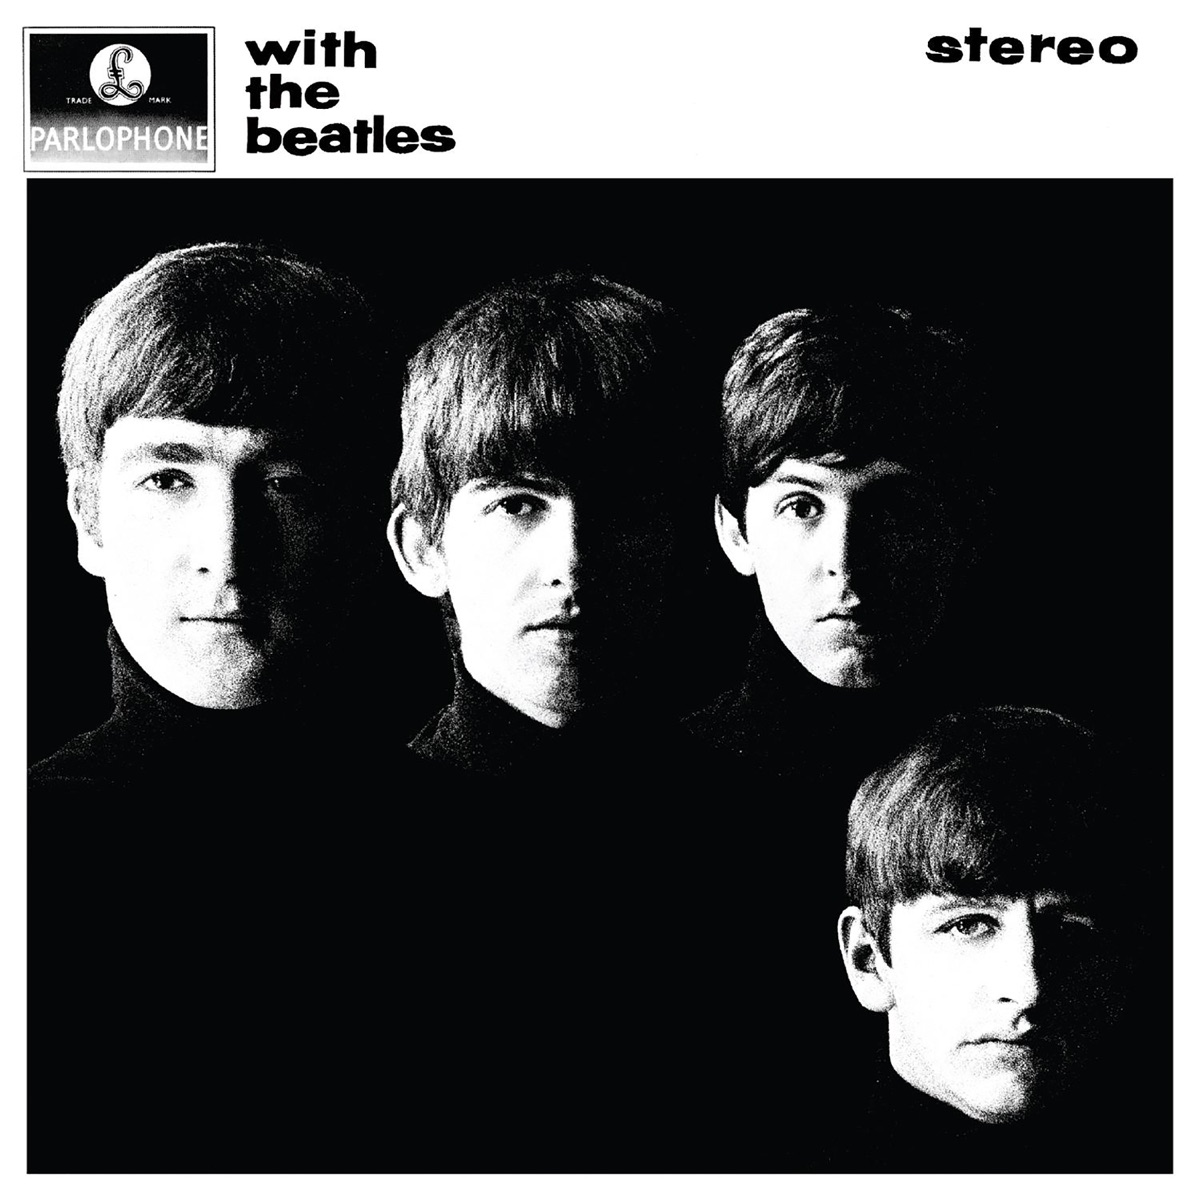 The Beatles (The White Album) - Album by The Beatles - Apple Music